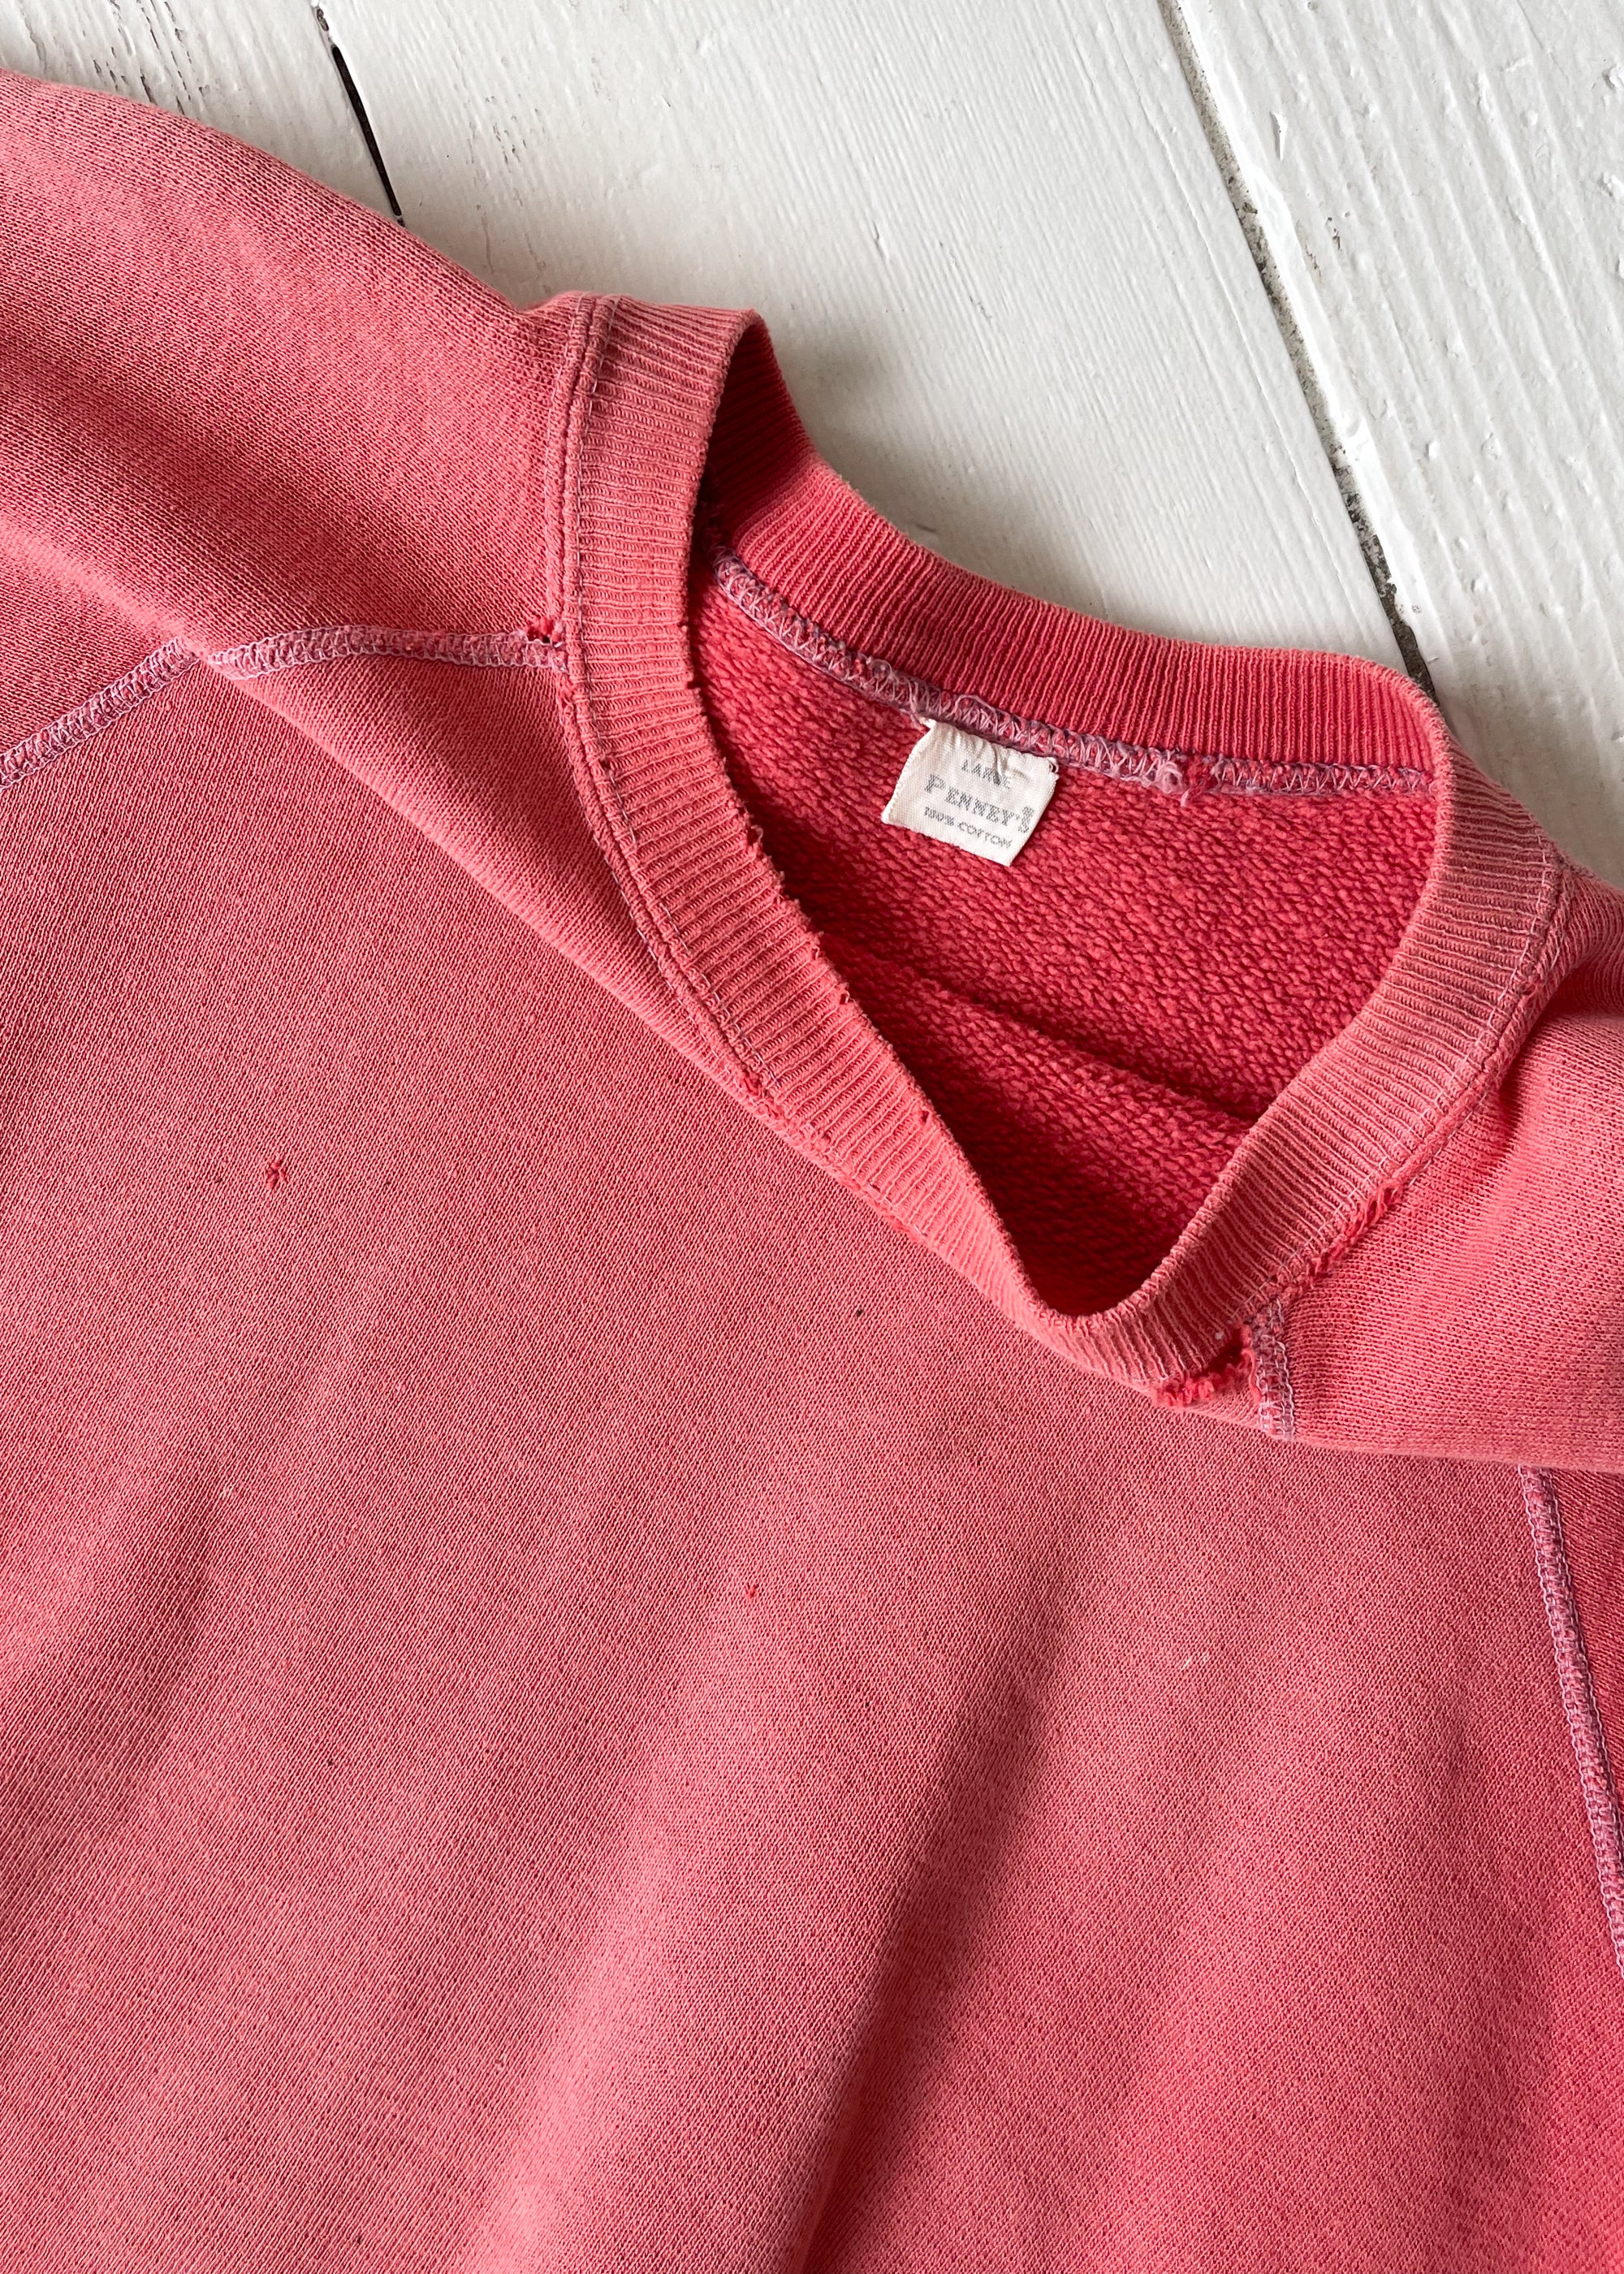 Vintage 1950s Penneys Short Sleeve Sweatshirt